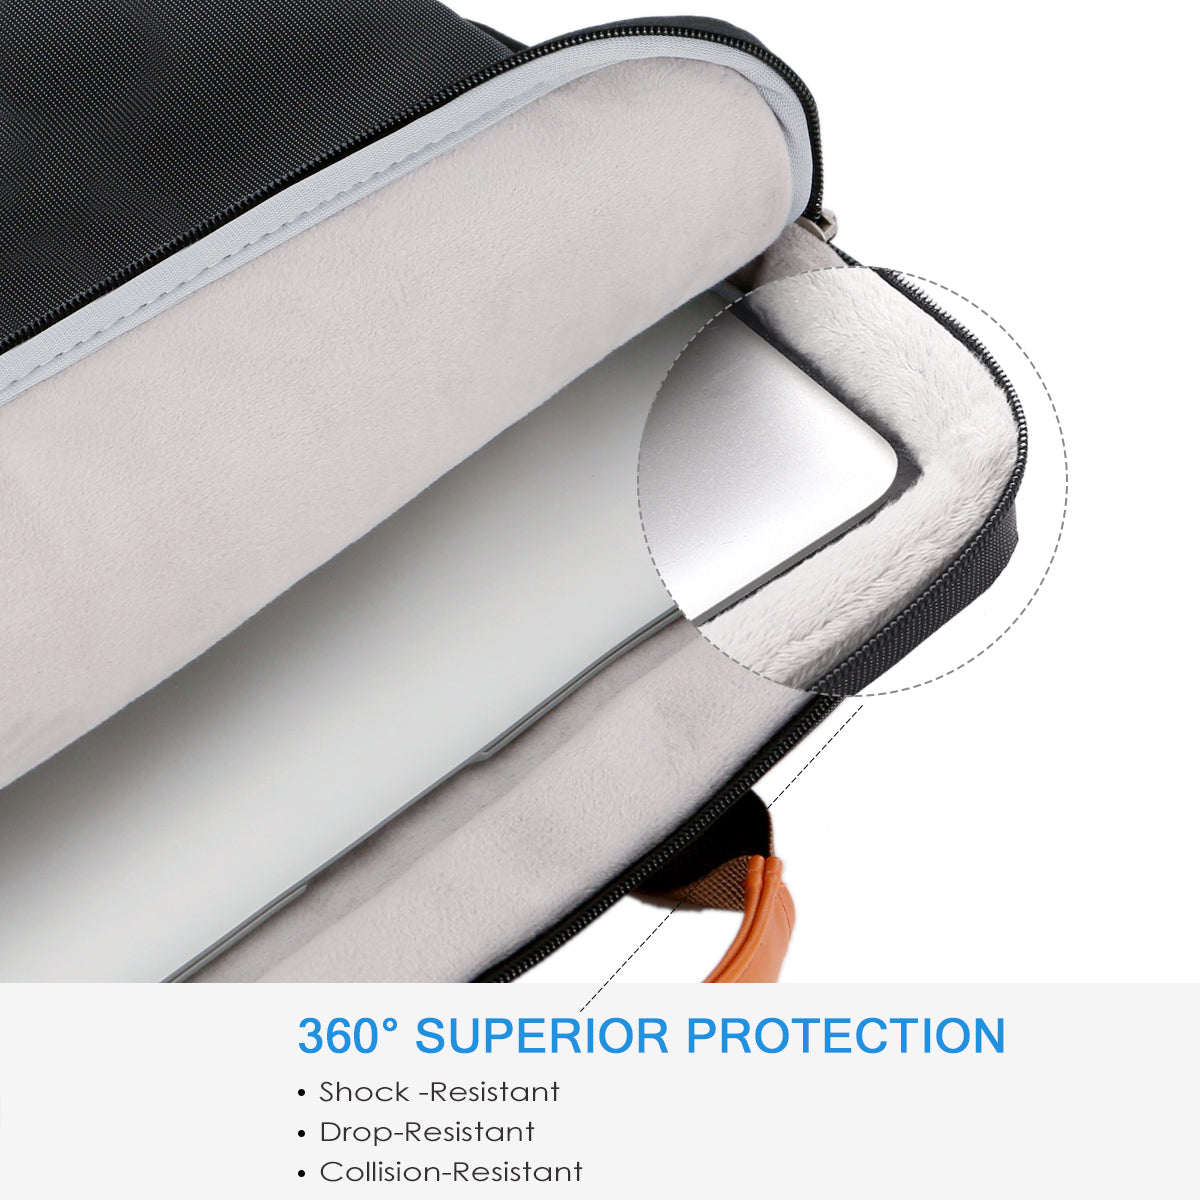 macbook pro sleeve cases